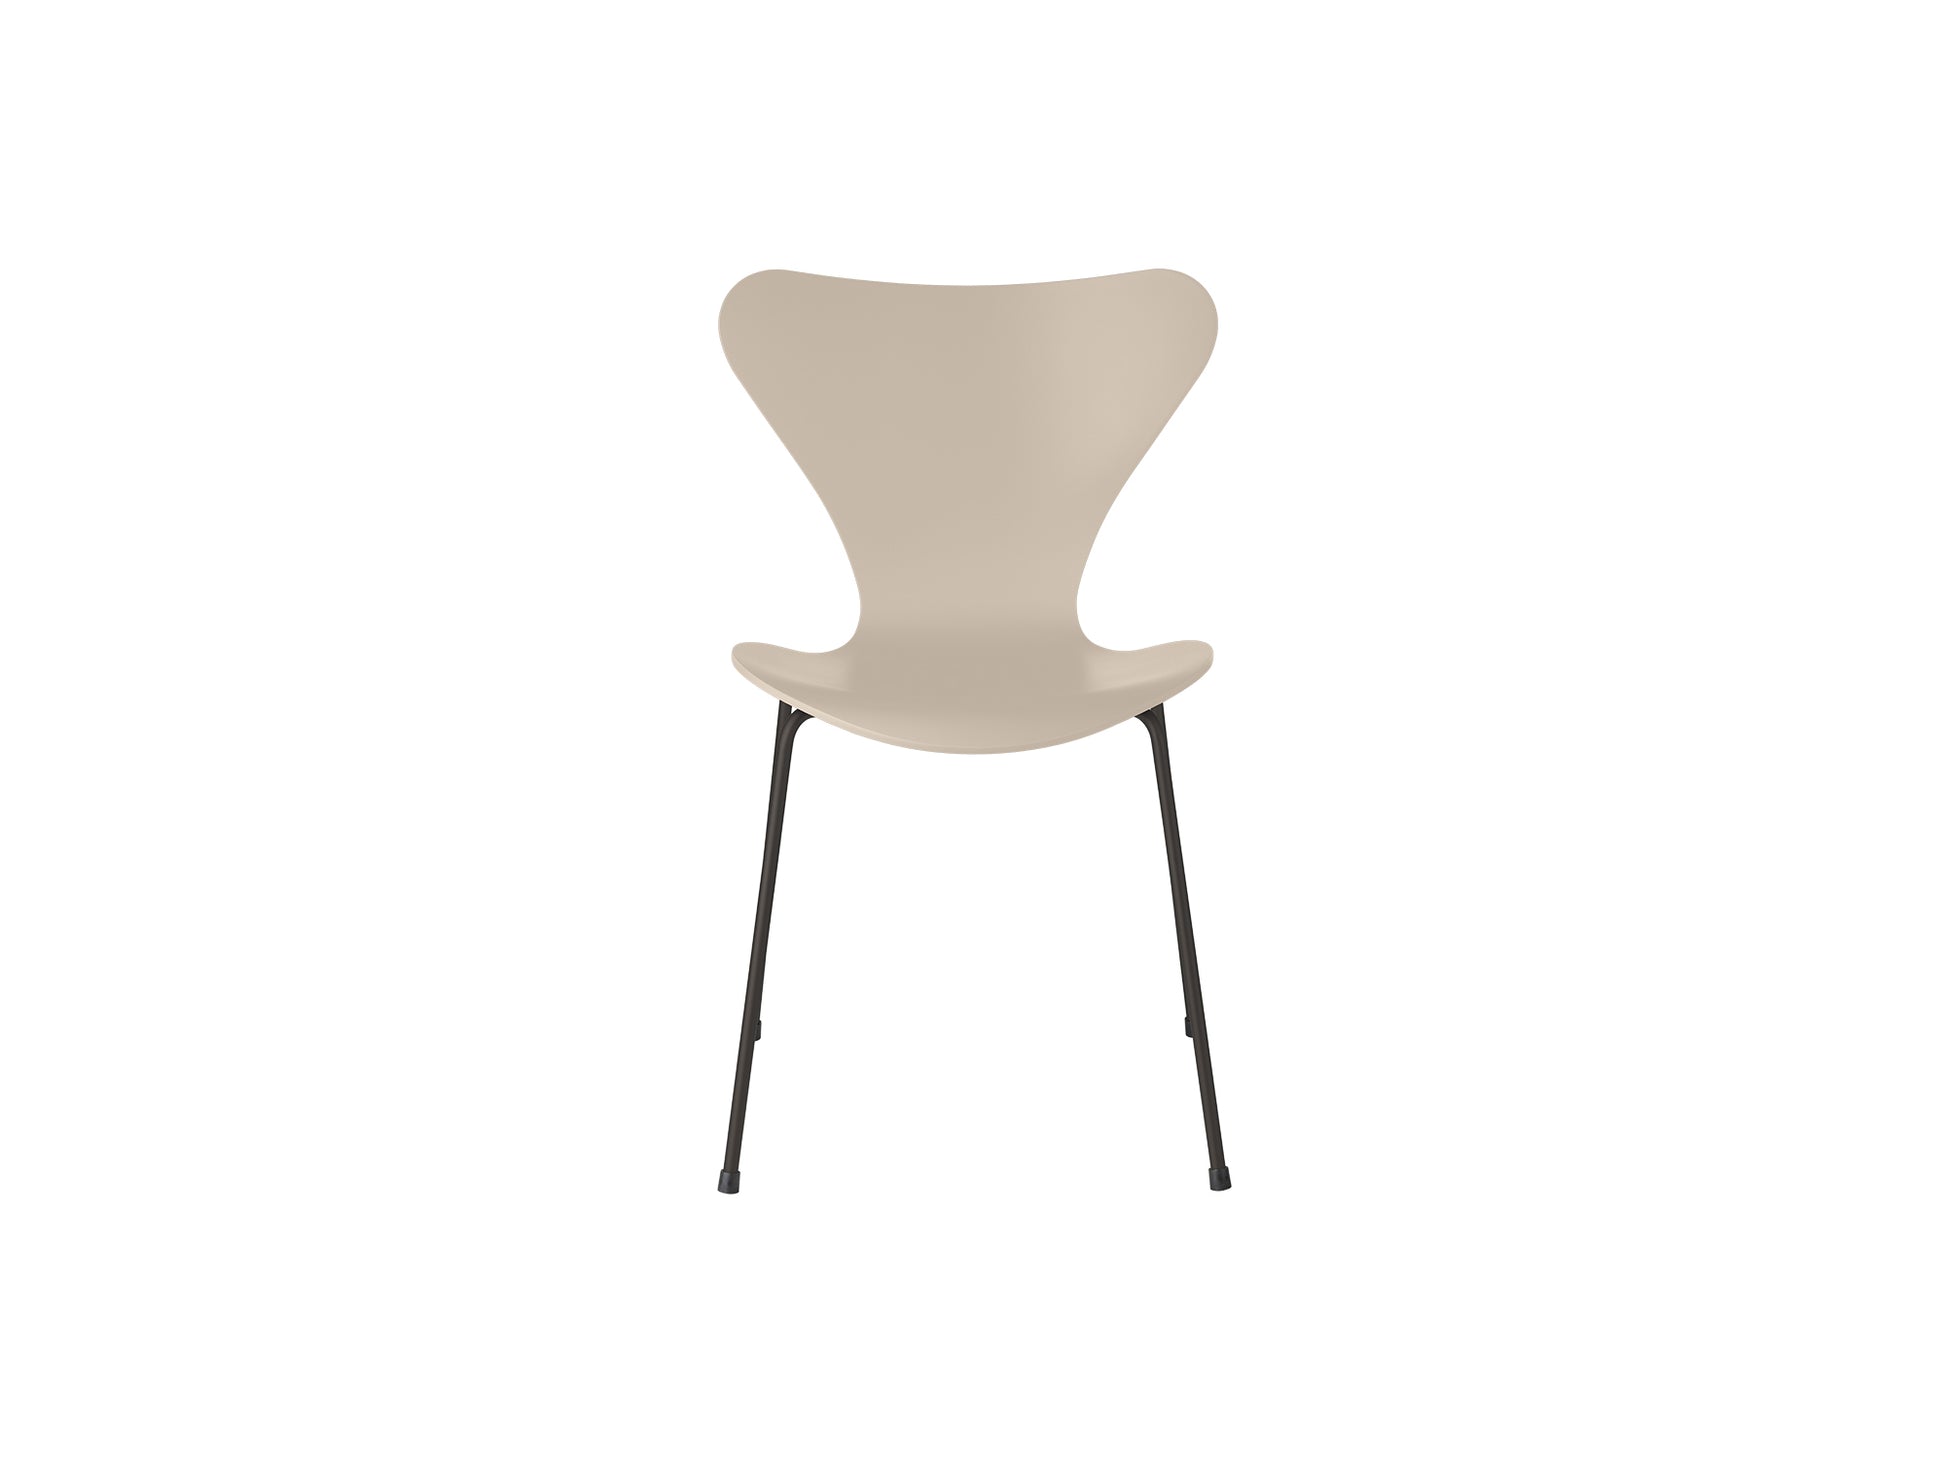 Series 7™ 3107 Dining Chair by Fritz Hansen - Light Beige Lacquered Veneer Shell / Warm Graphite Steel